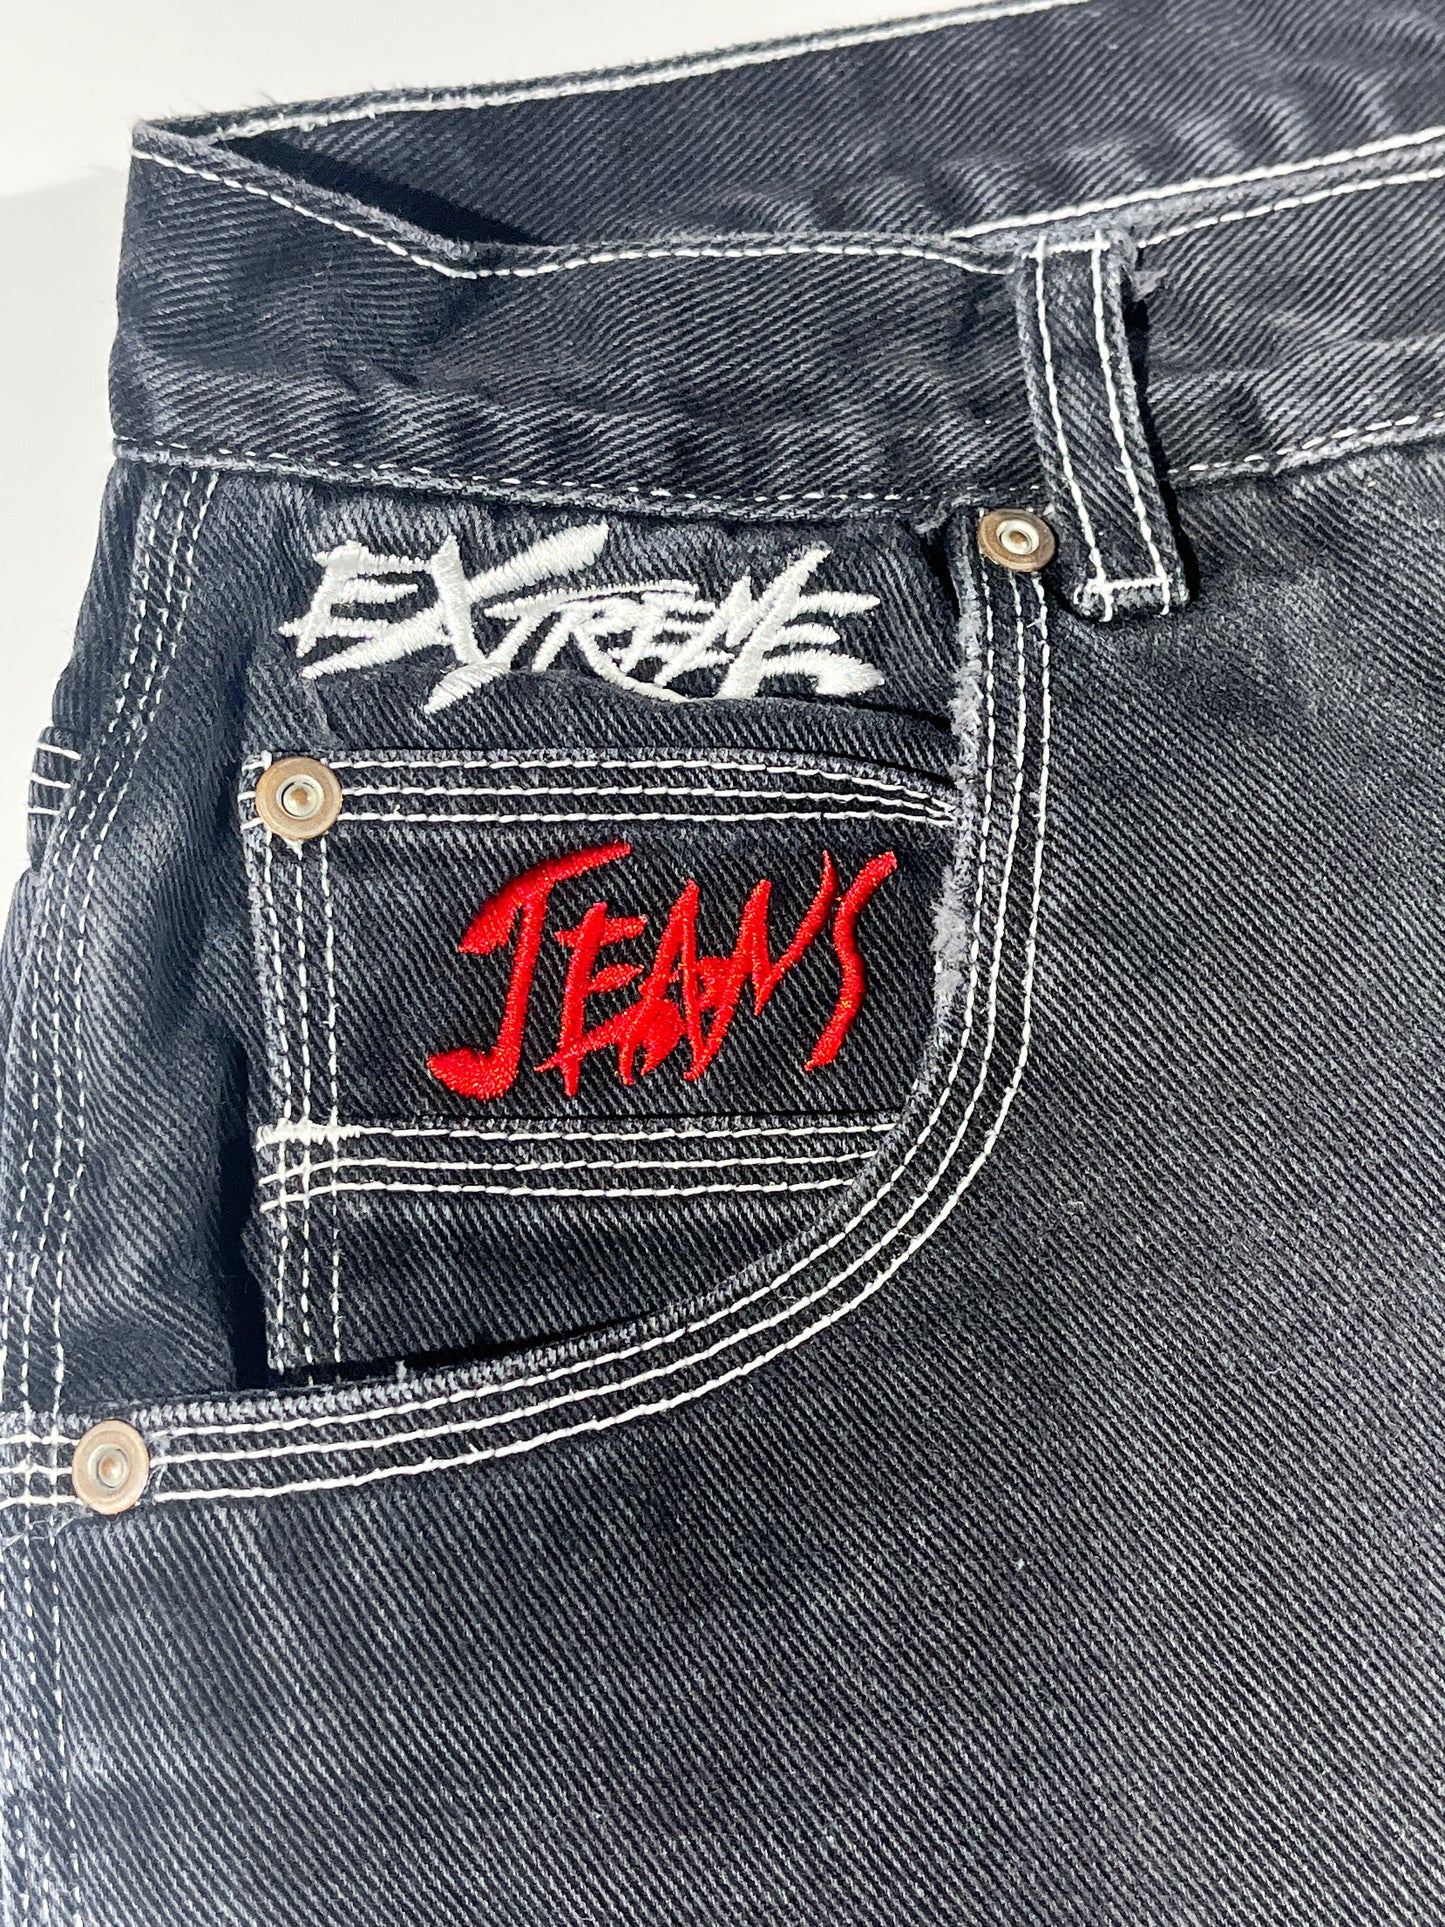 Vintage 90's Denim Extreme Jeans Shorts